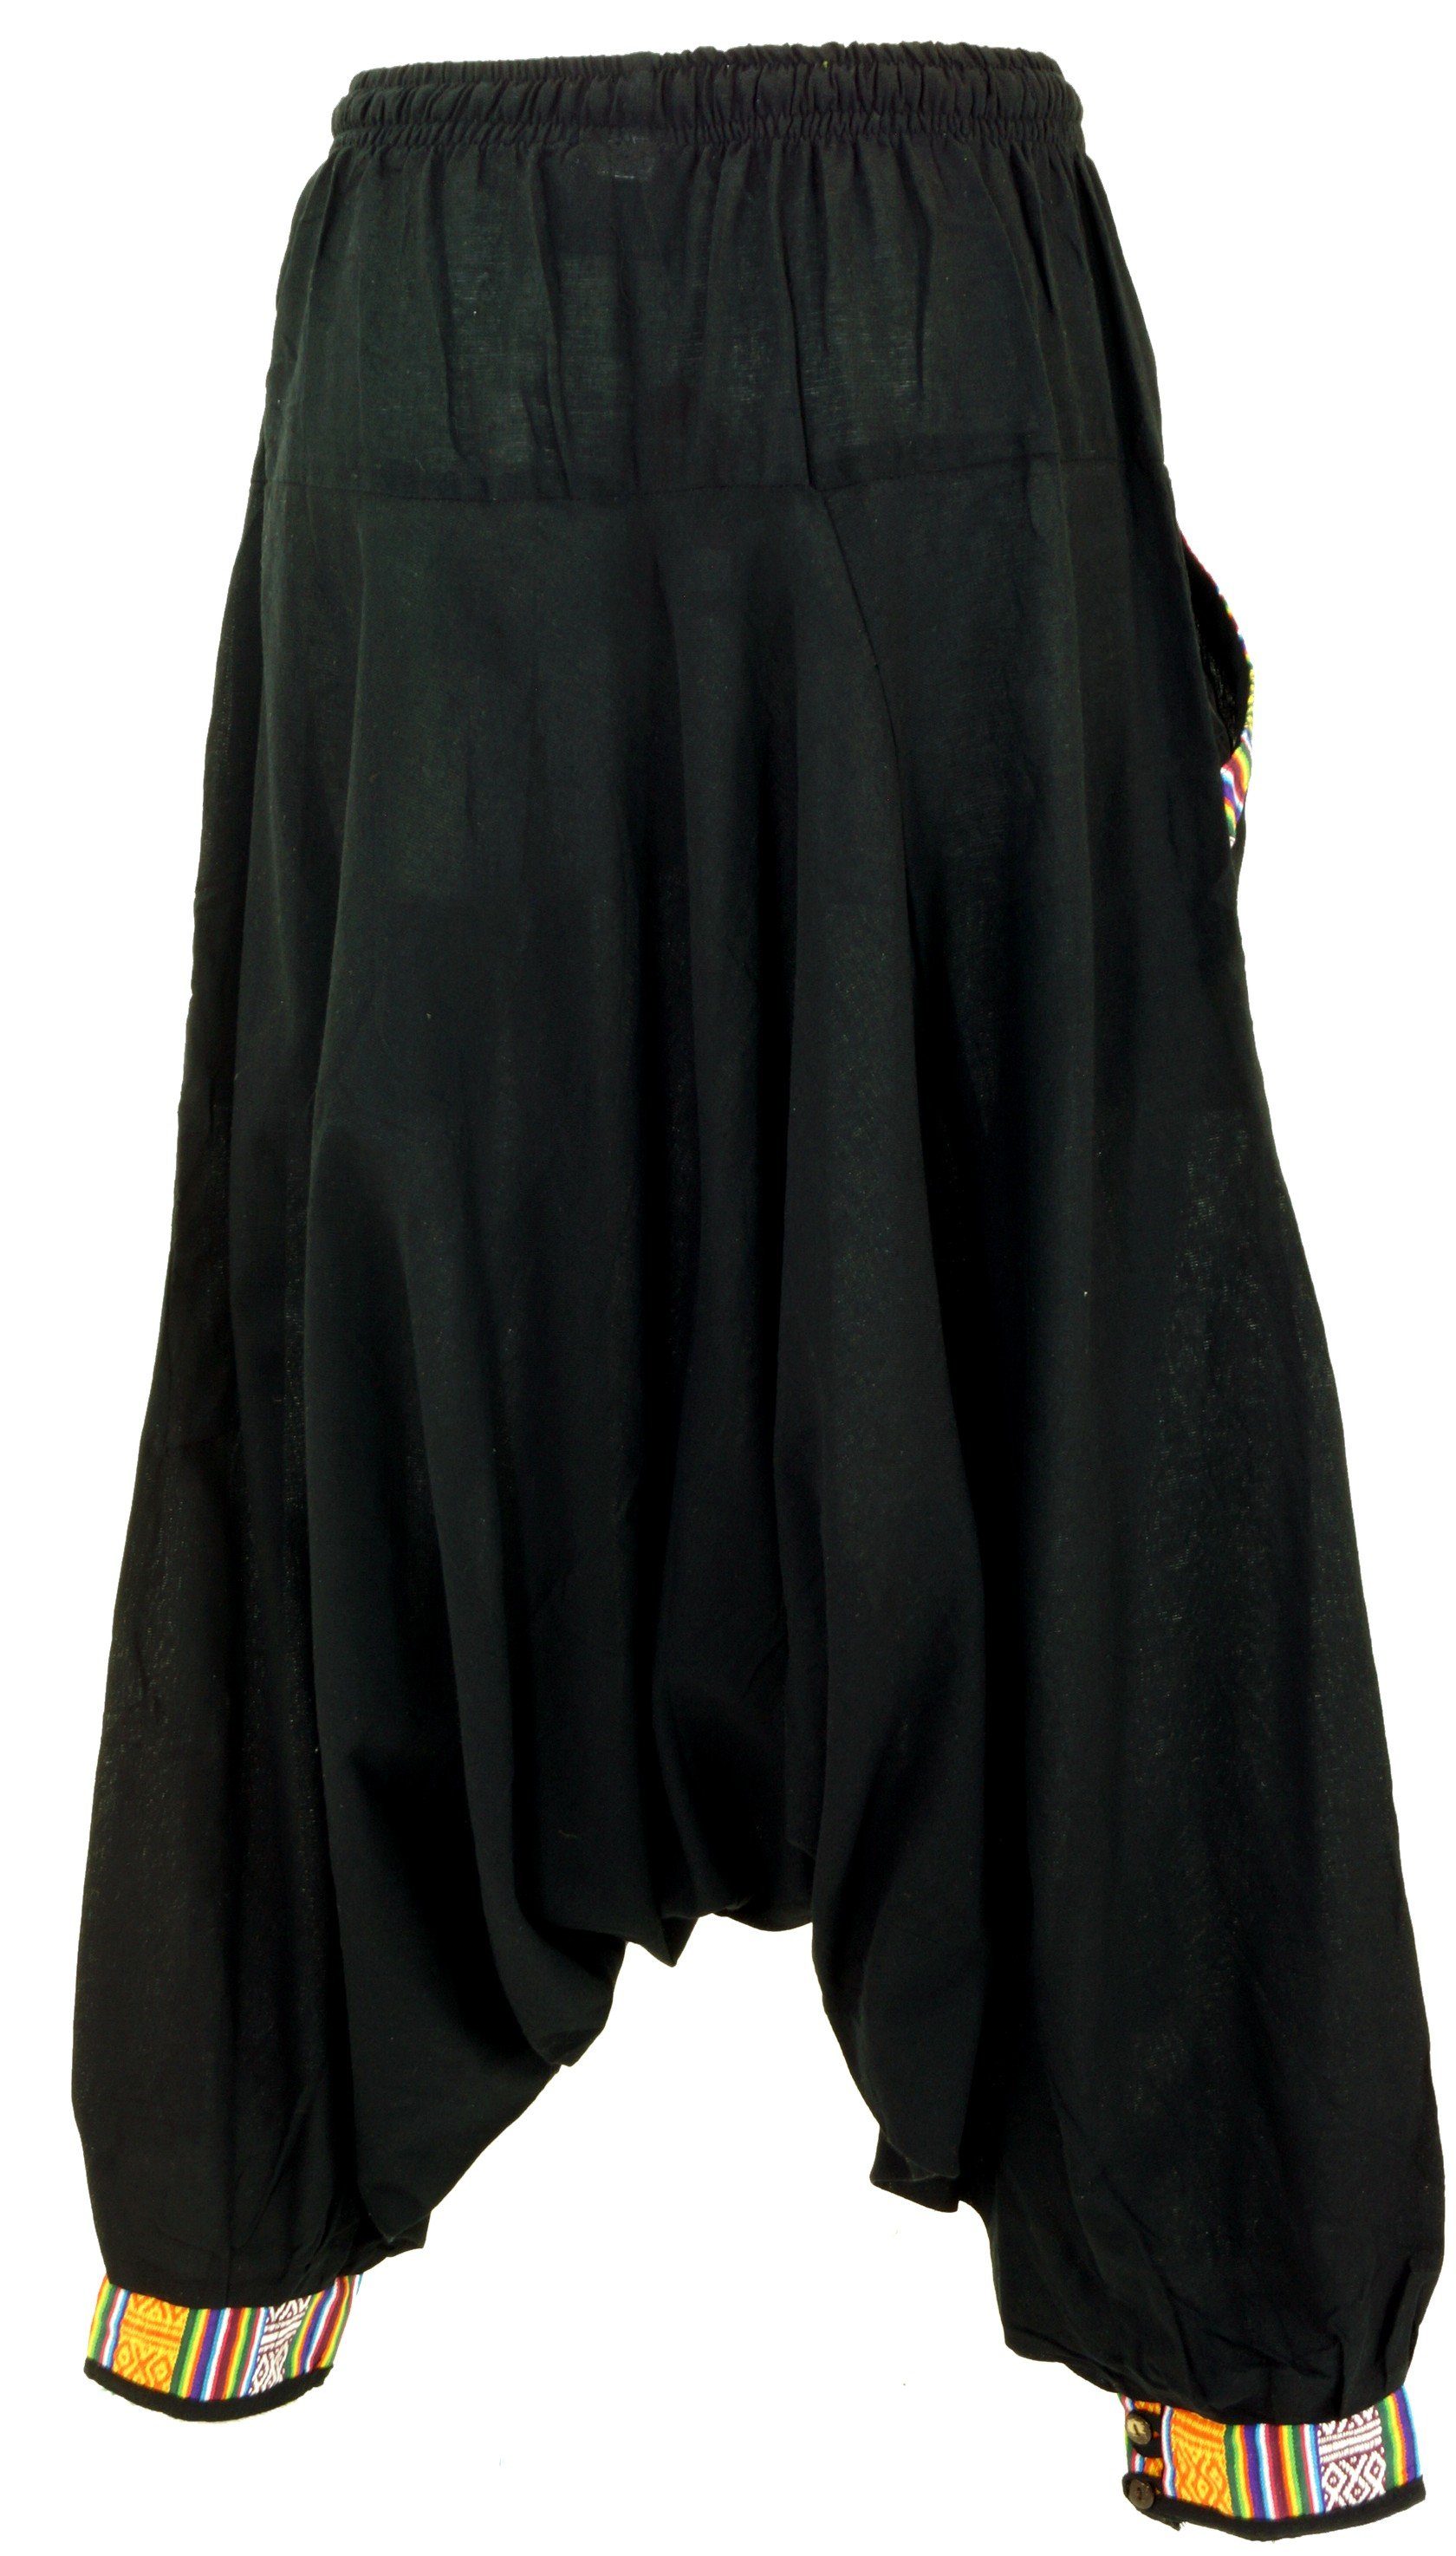 Guru-Shop Pluderhose, schwarz alternative Bekleidung - Nepali Ethno Aladinhose Relaxhose Style,